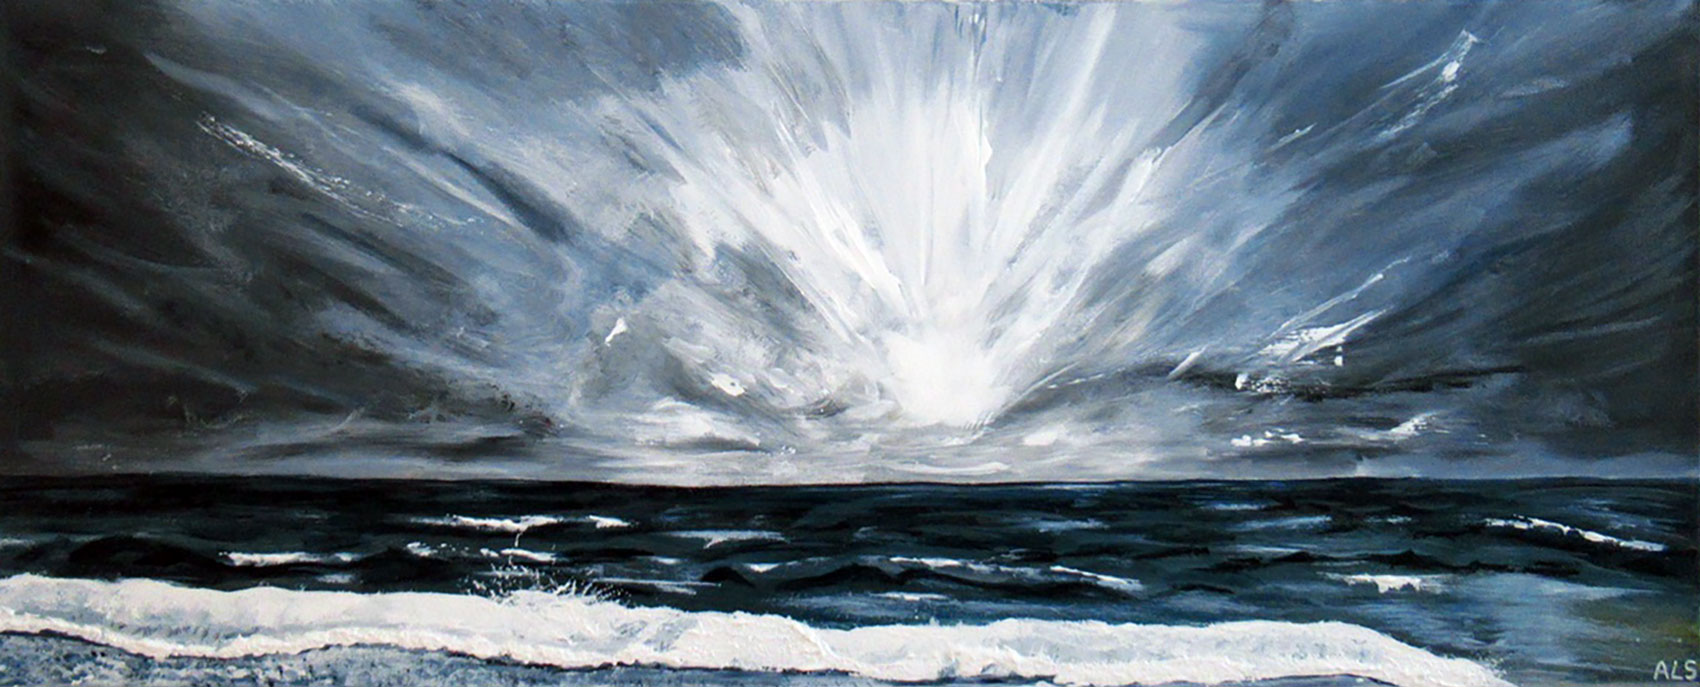 Storm Imminent,Amanda Lyon-Smith,artist,teignmouth,devon